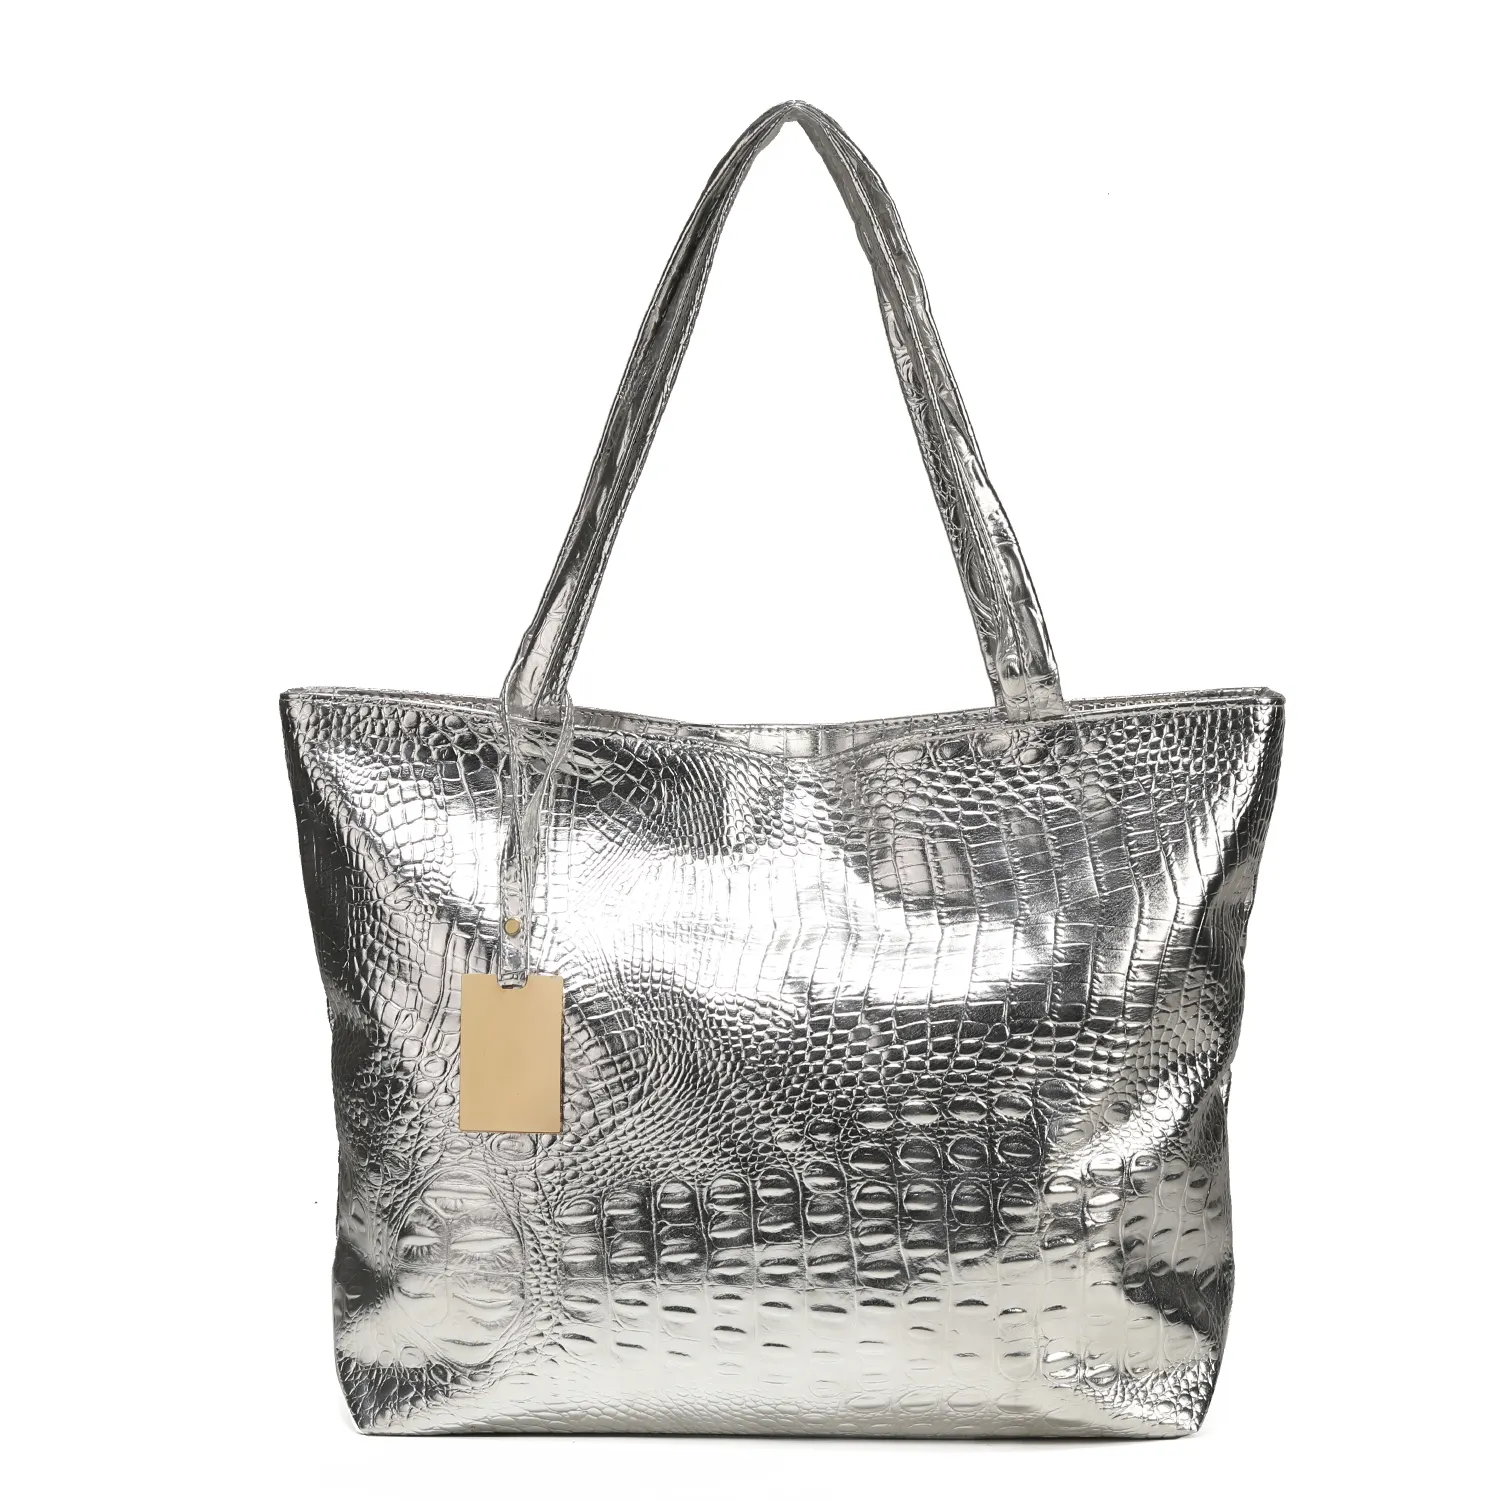 Metal Plate Tassel PU Handbag Women Fashion Black Metallic Gold Silver Crocodile Large Tote Bag Handbags Shoulder Bag